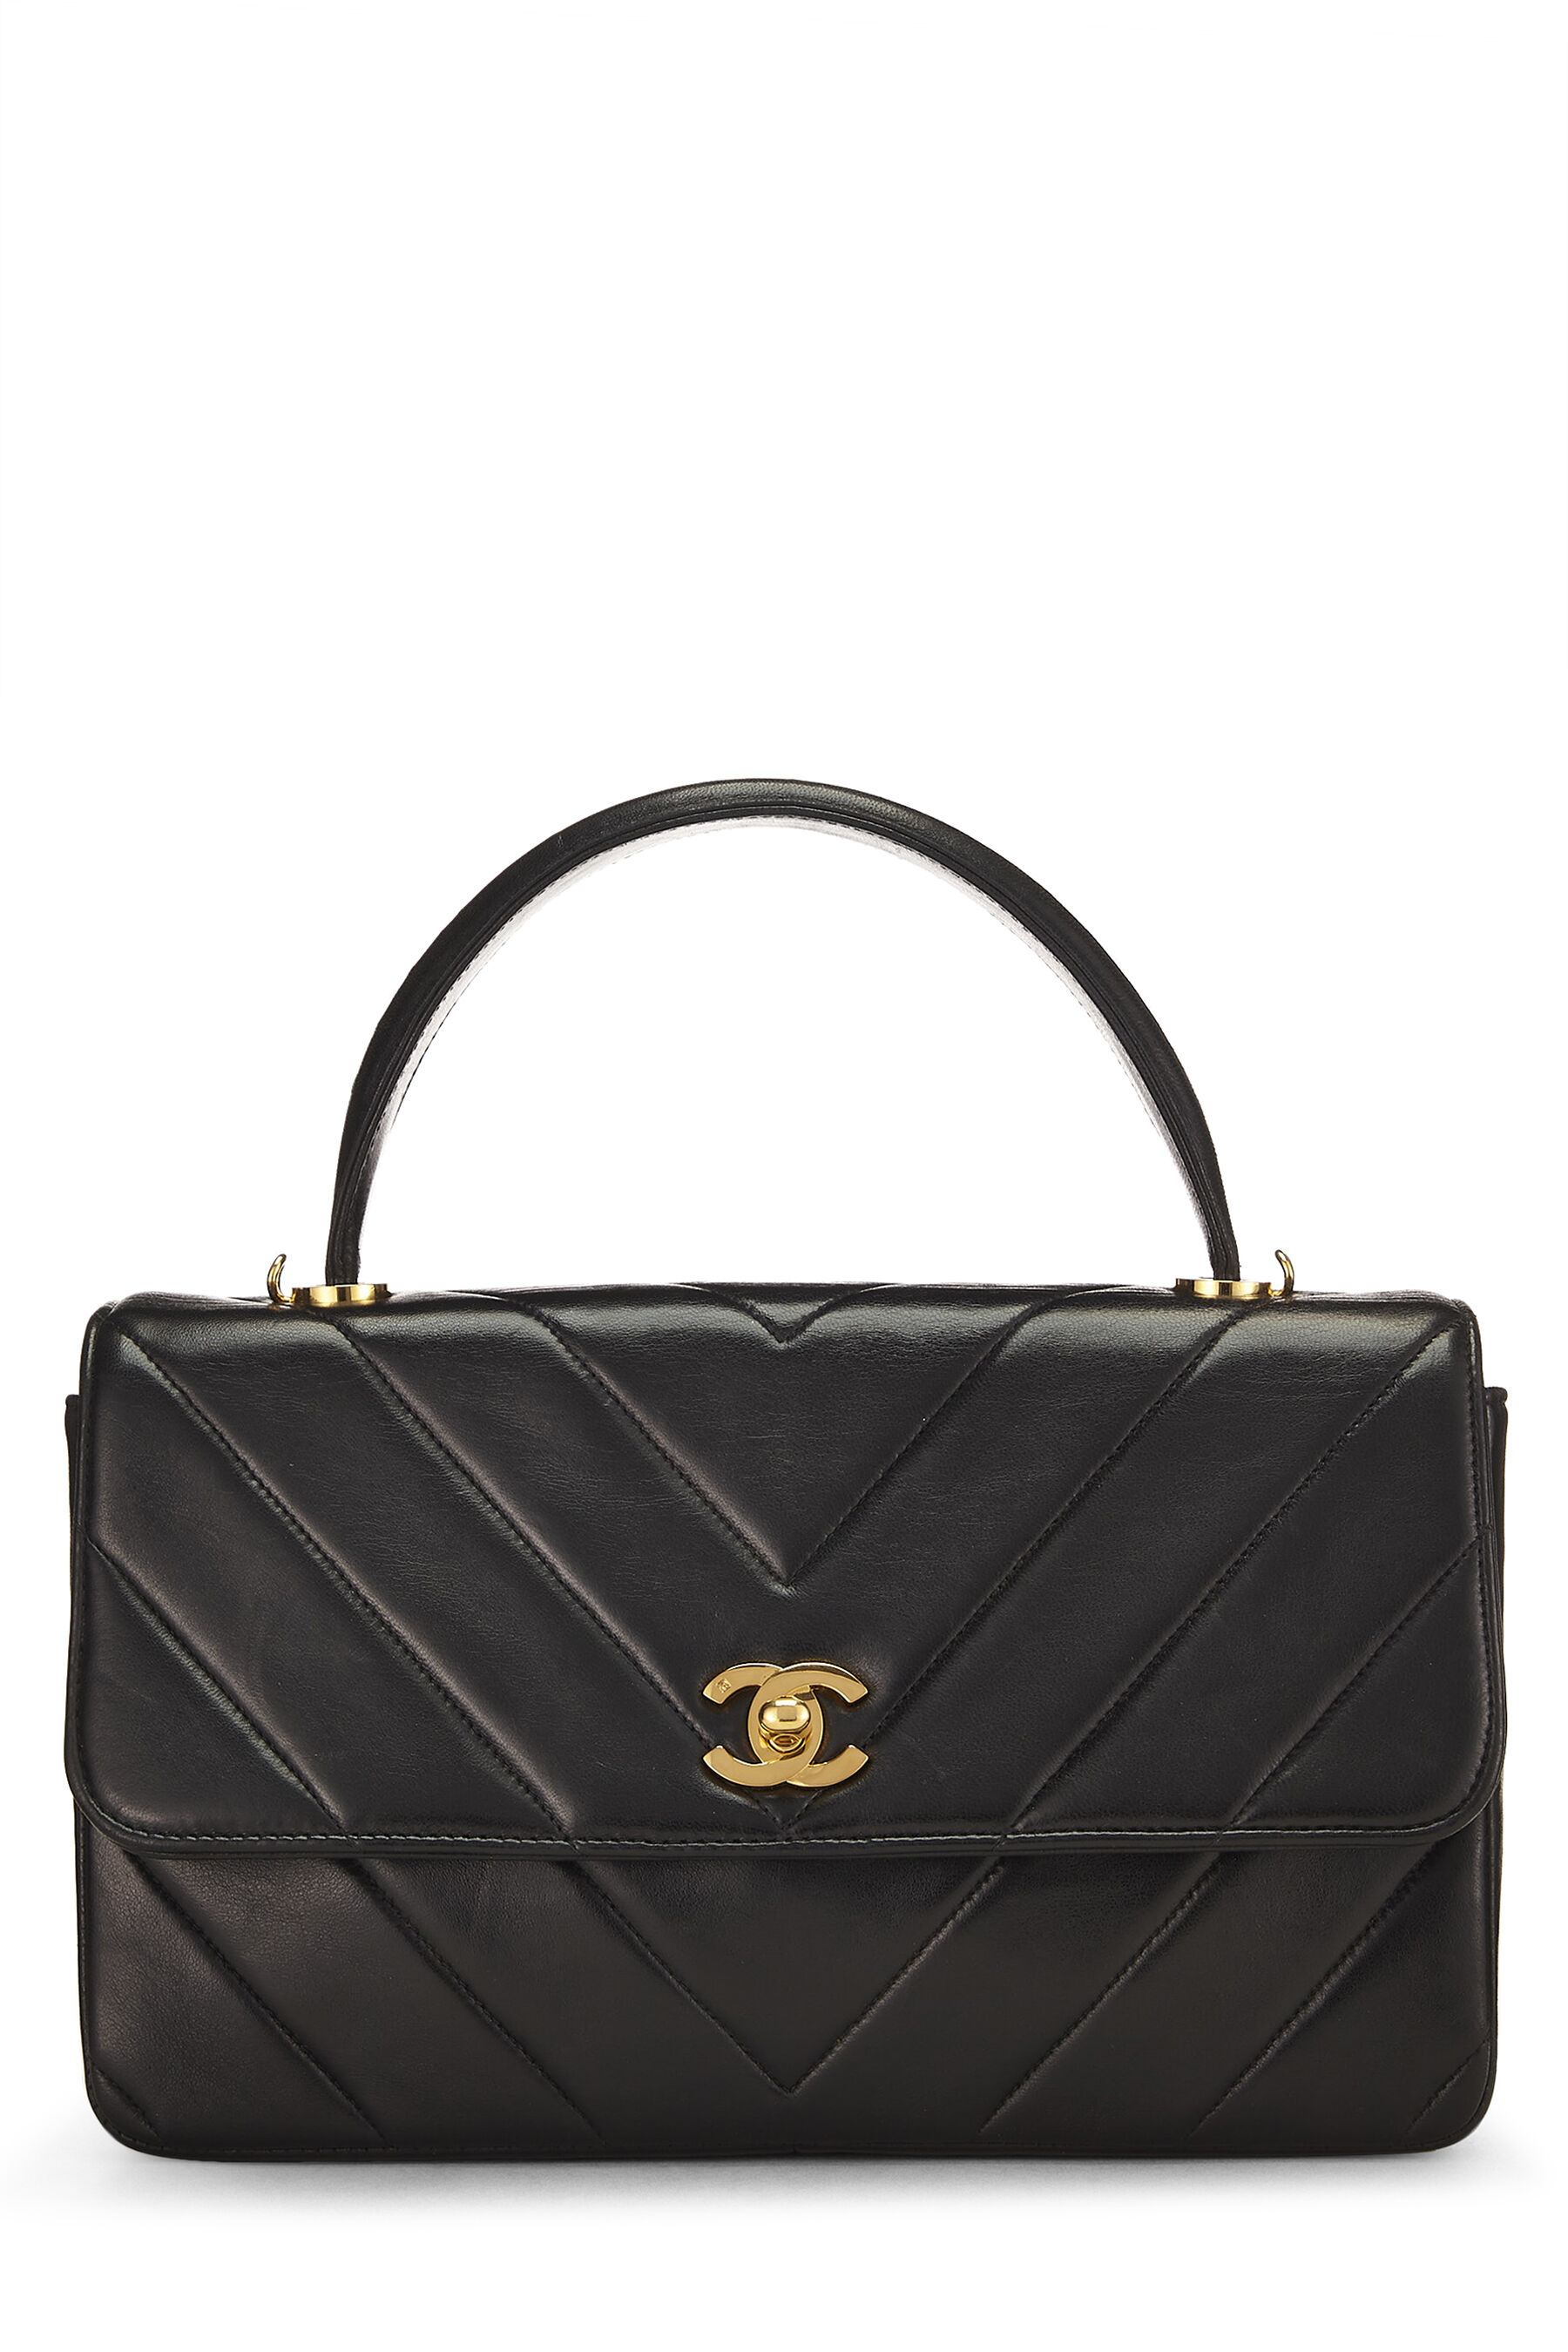 Chanel Medium Classic Double Flap Bag Beige Chevron Caviar Light Gold  Hardware